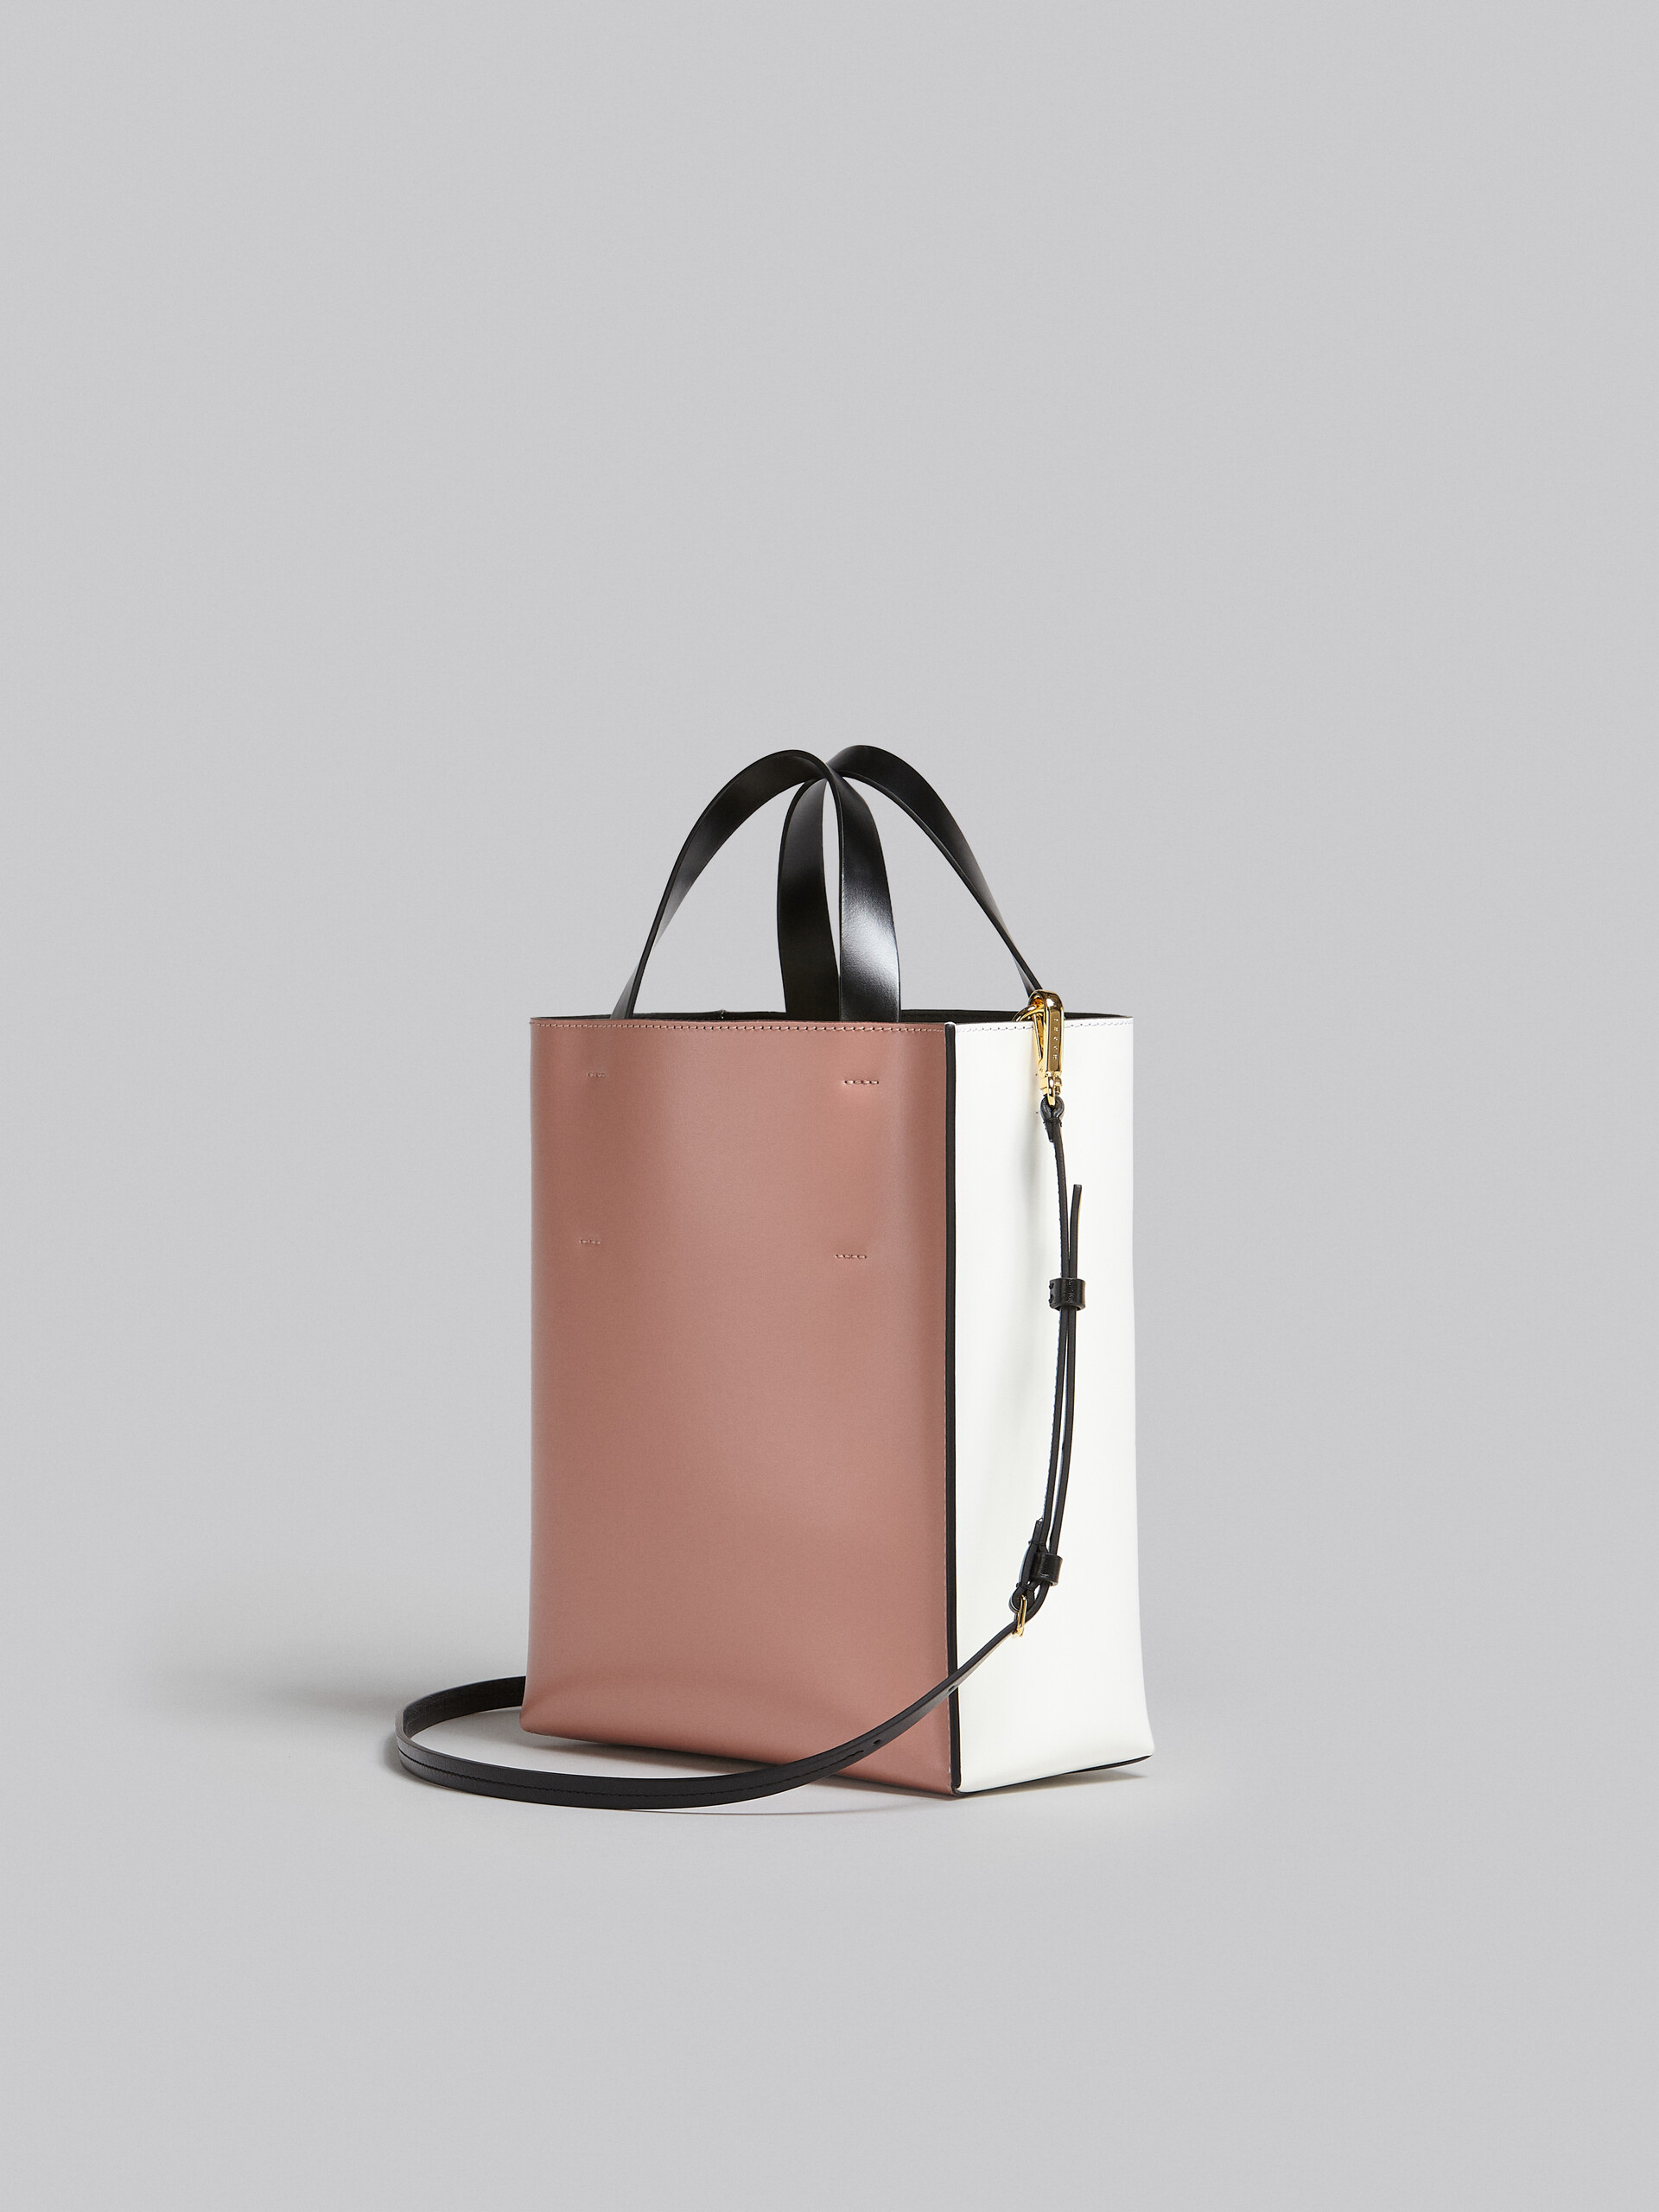 Museo Soft Bag Piccola in pelle bianca e rosa - Borse shopping - Image 3